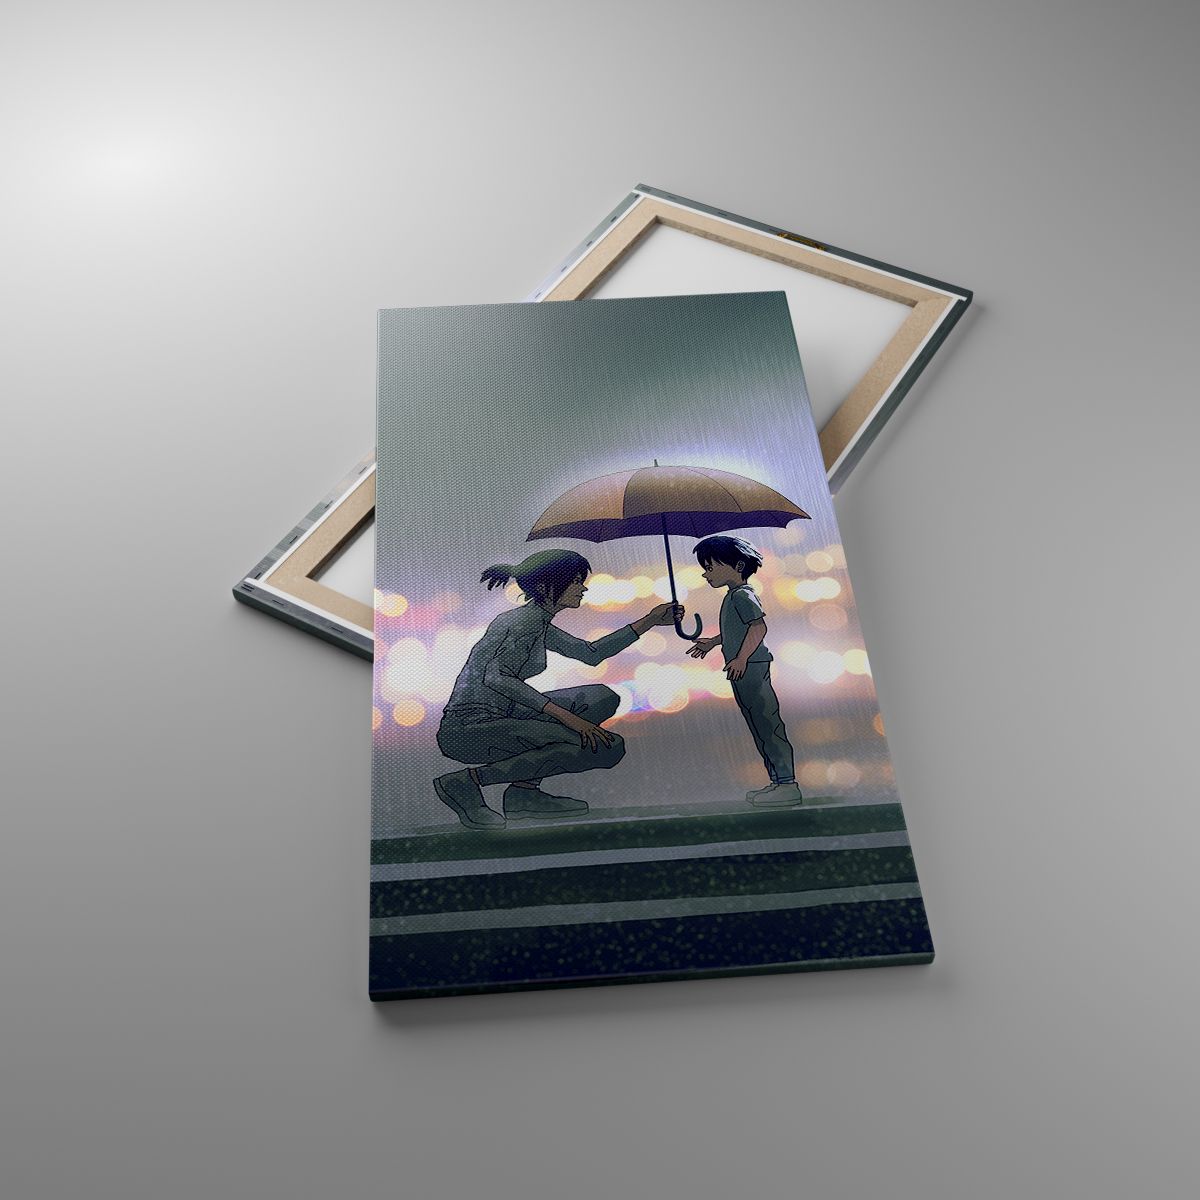 Leinwandbild Für Kinder, Leinwandbild Familie, Leinwandbild Regenschirm, Leinwandbild Kunst, Leinwandbild Liebe